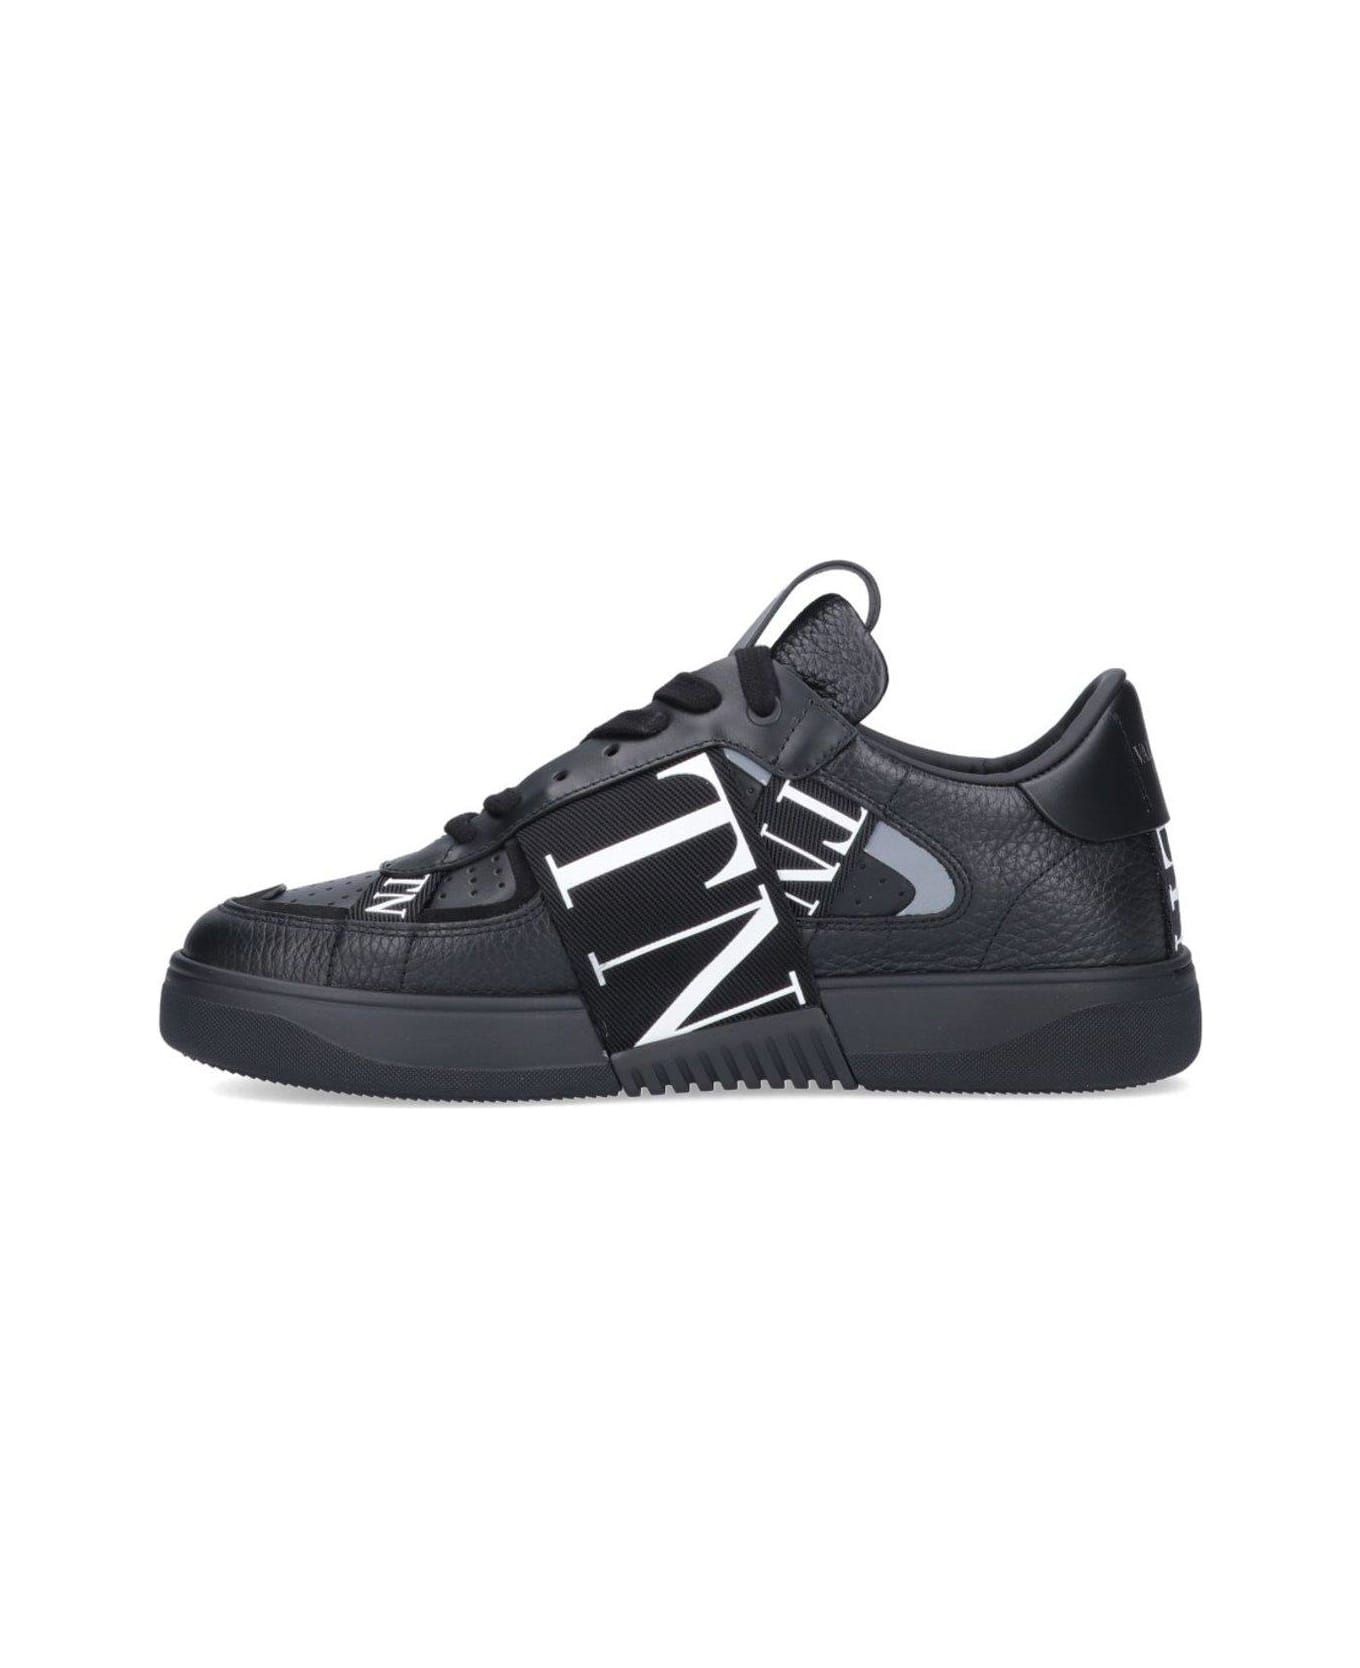 Valentino Garavani Vl7n Printed Lace-up Sneakers - Black/white スニーカー